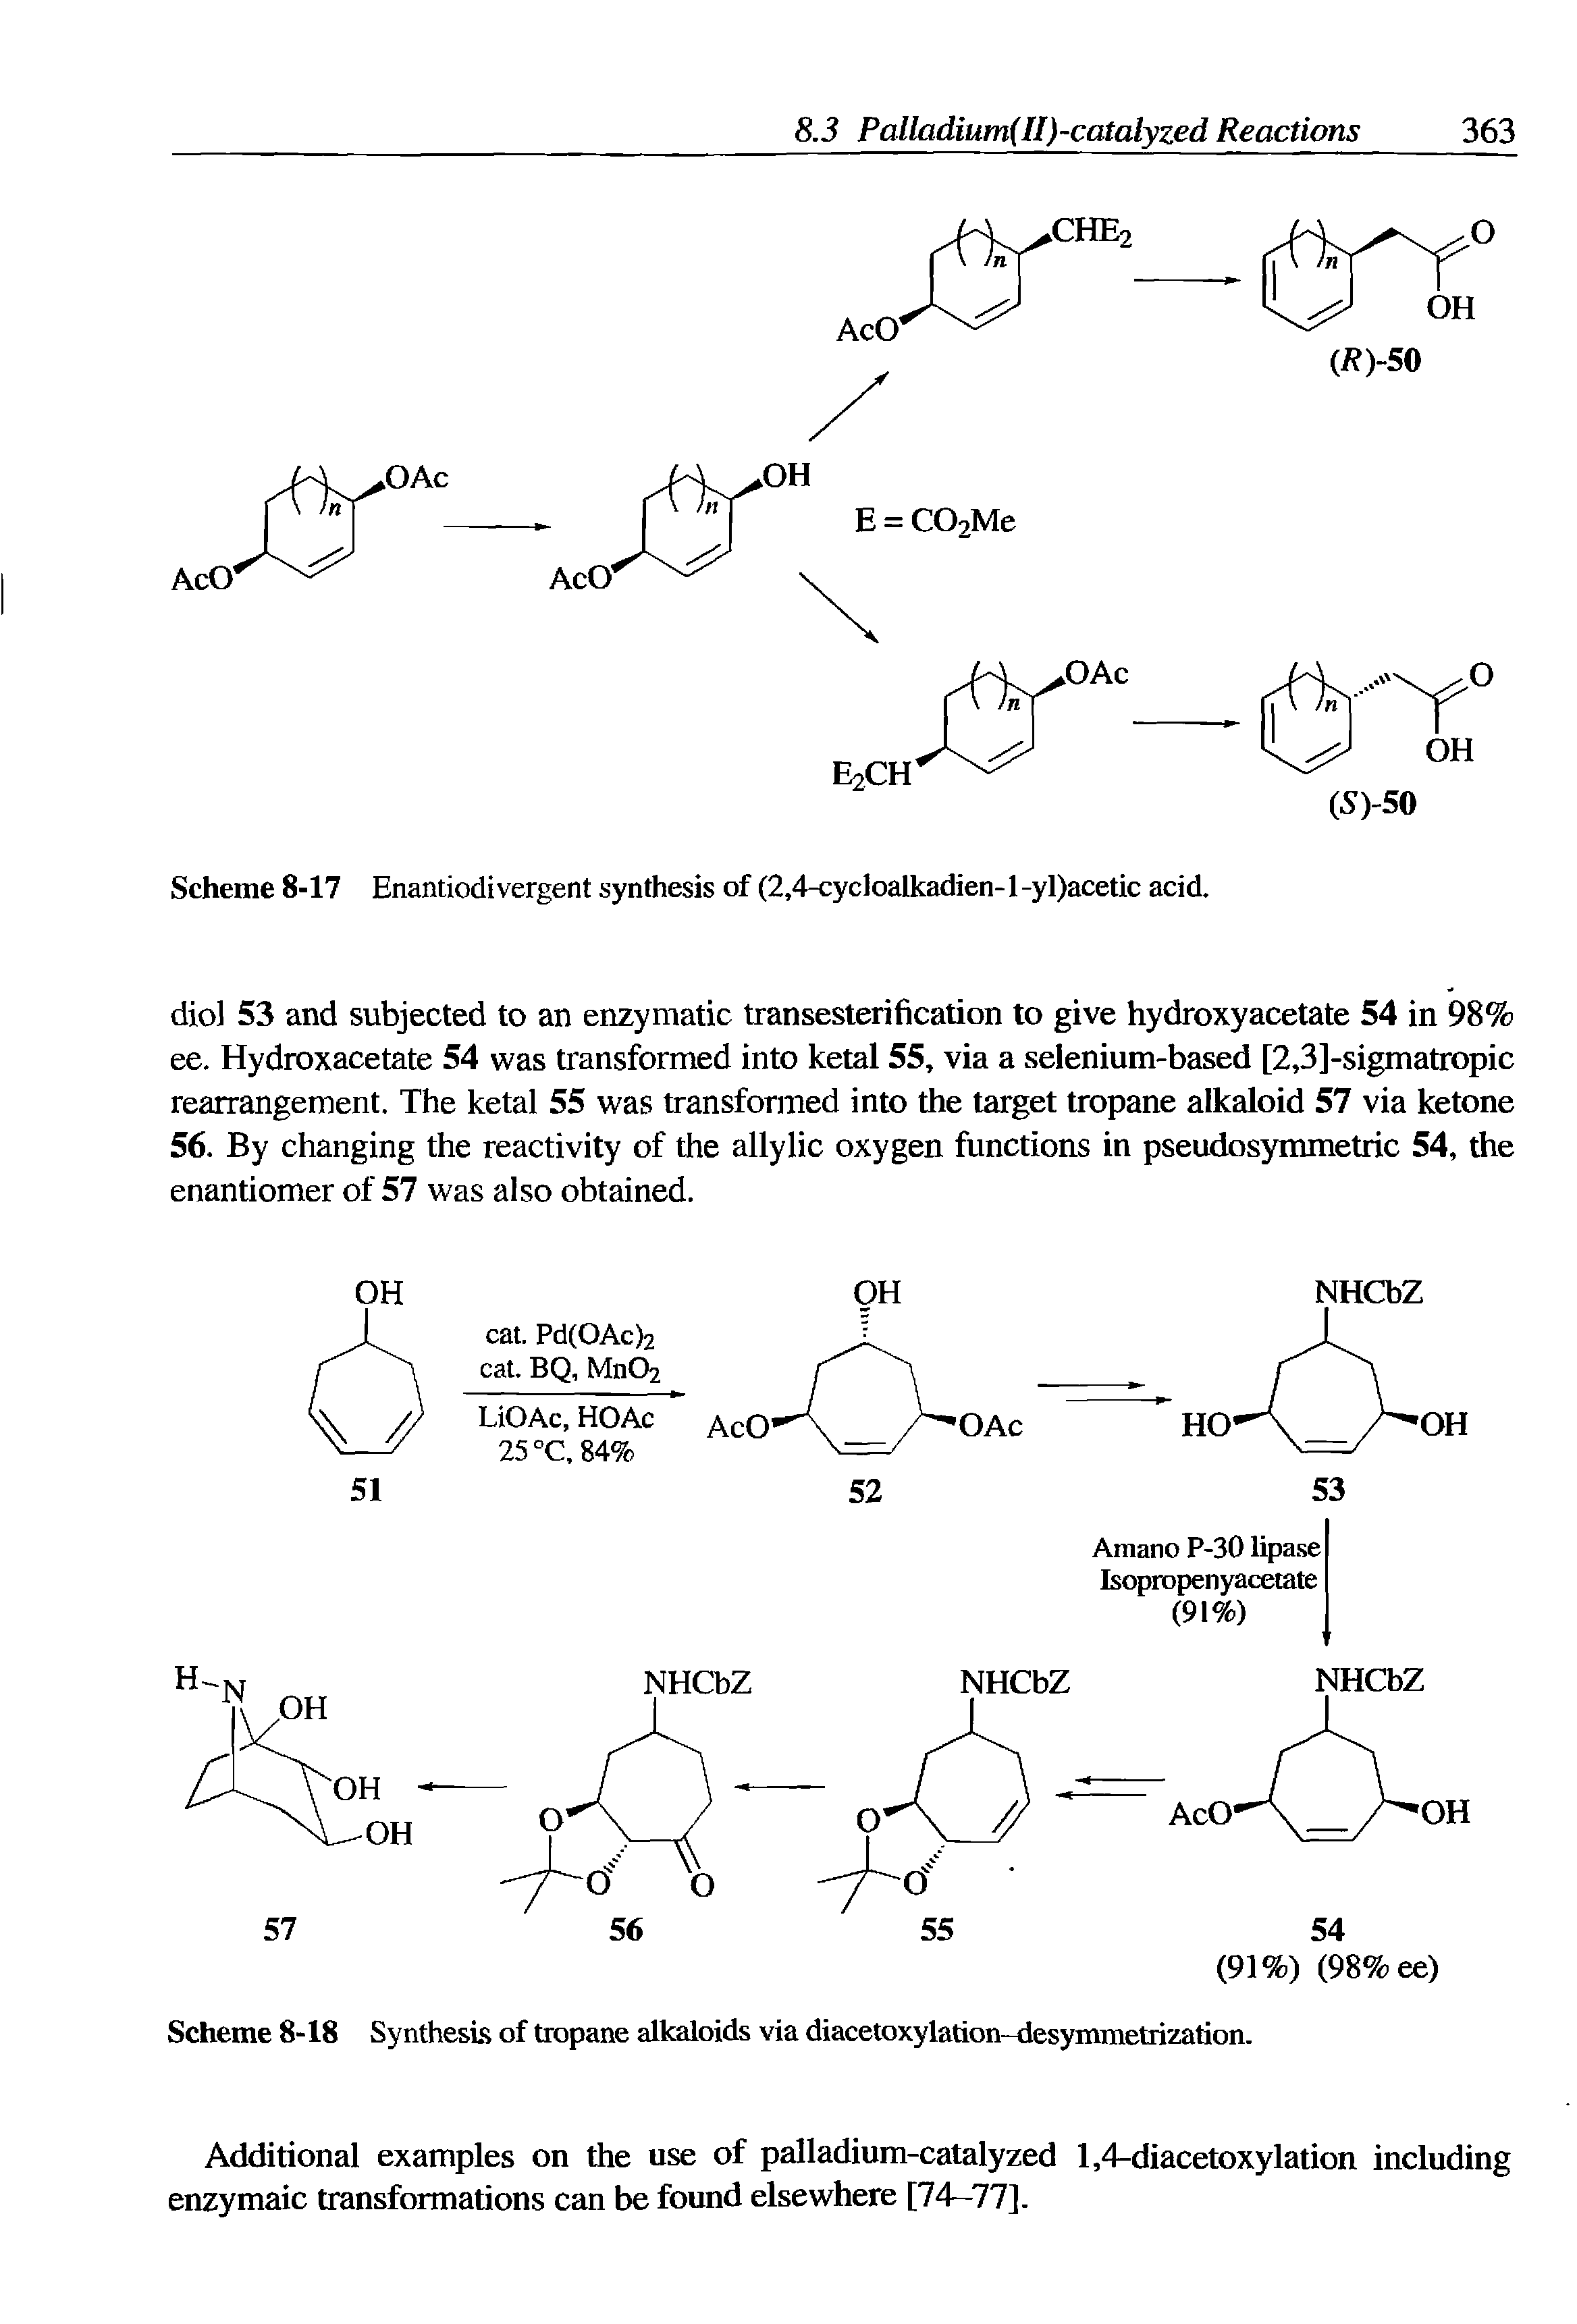 Scheme 8-18 Synthesis of tropane alkaloids via diacetoxylation-desymmetrization.